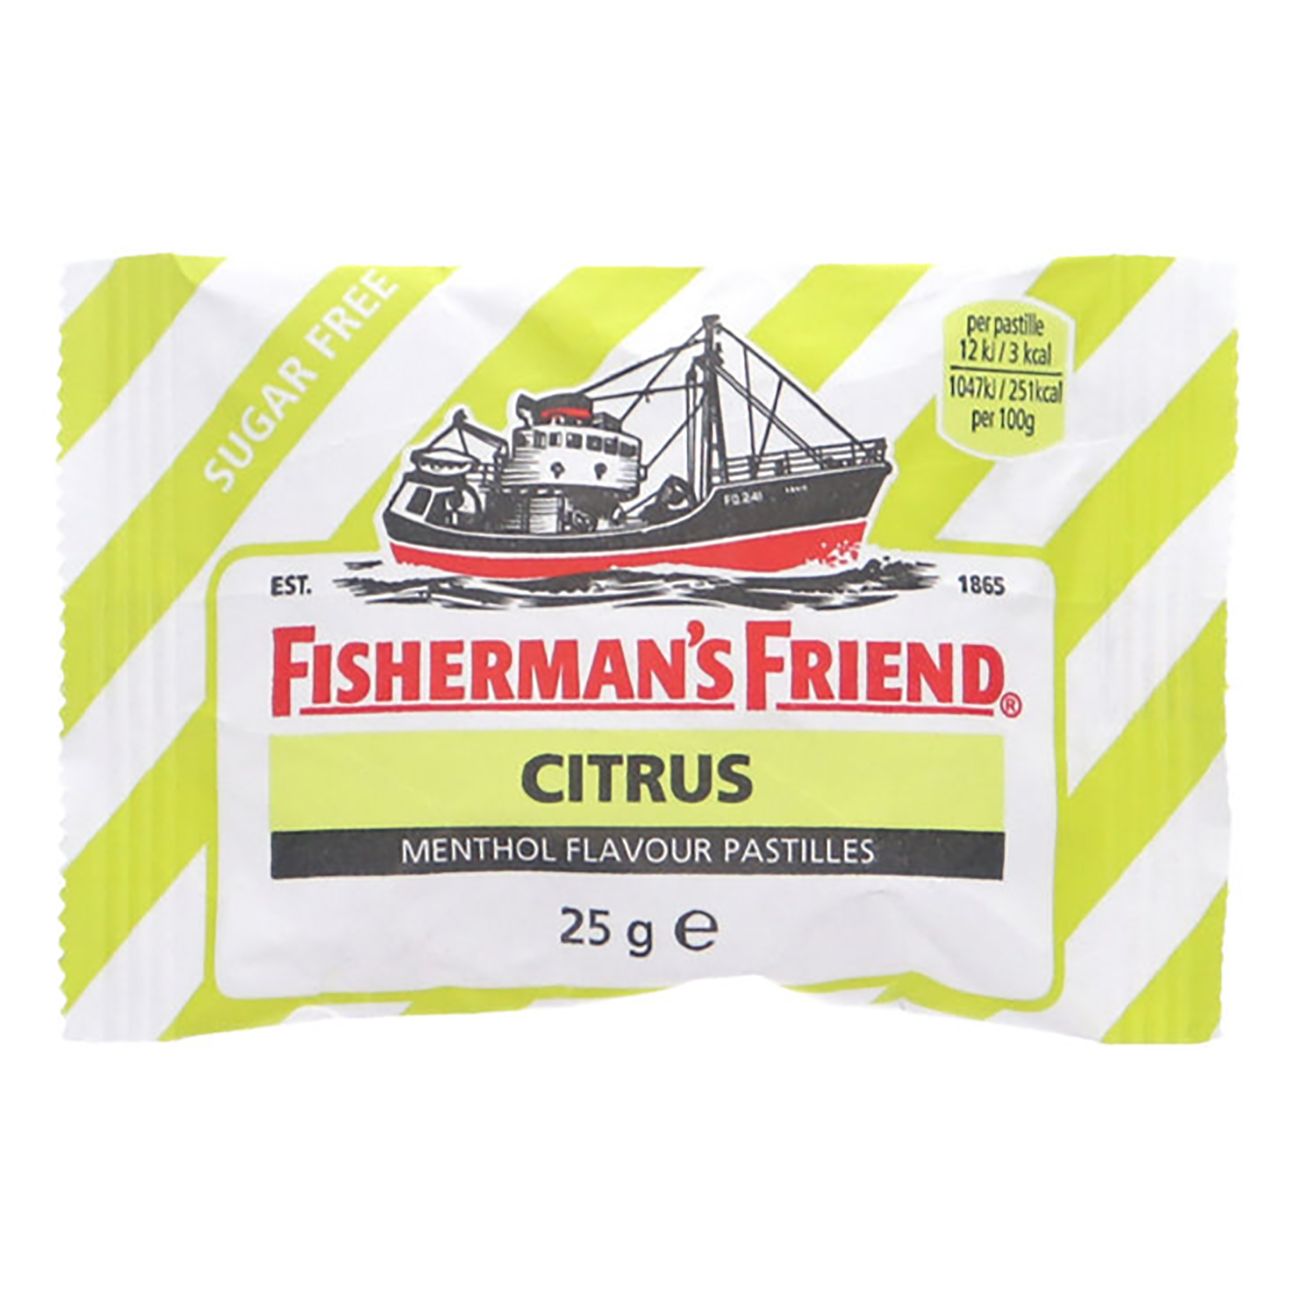 fishermans-friend-citrus-sockerfri-92111-2